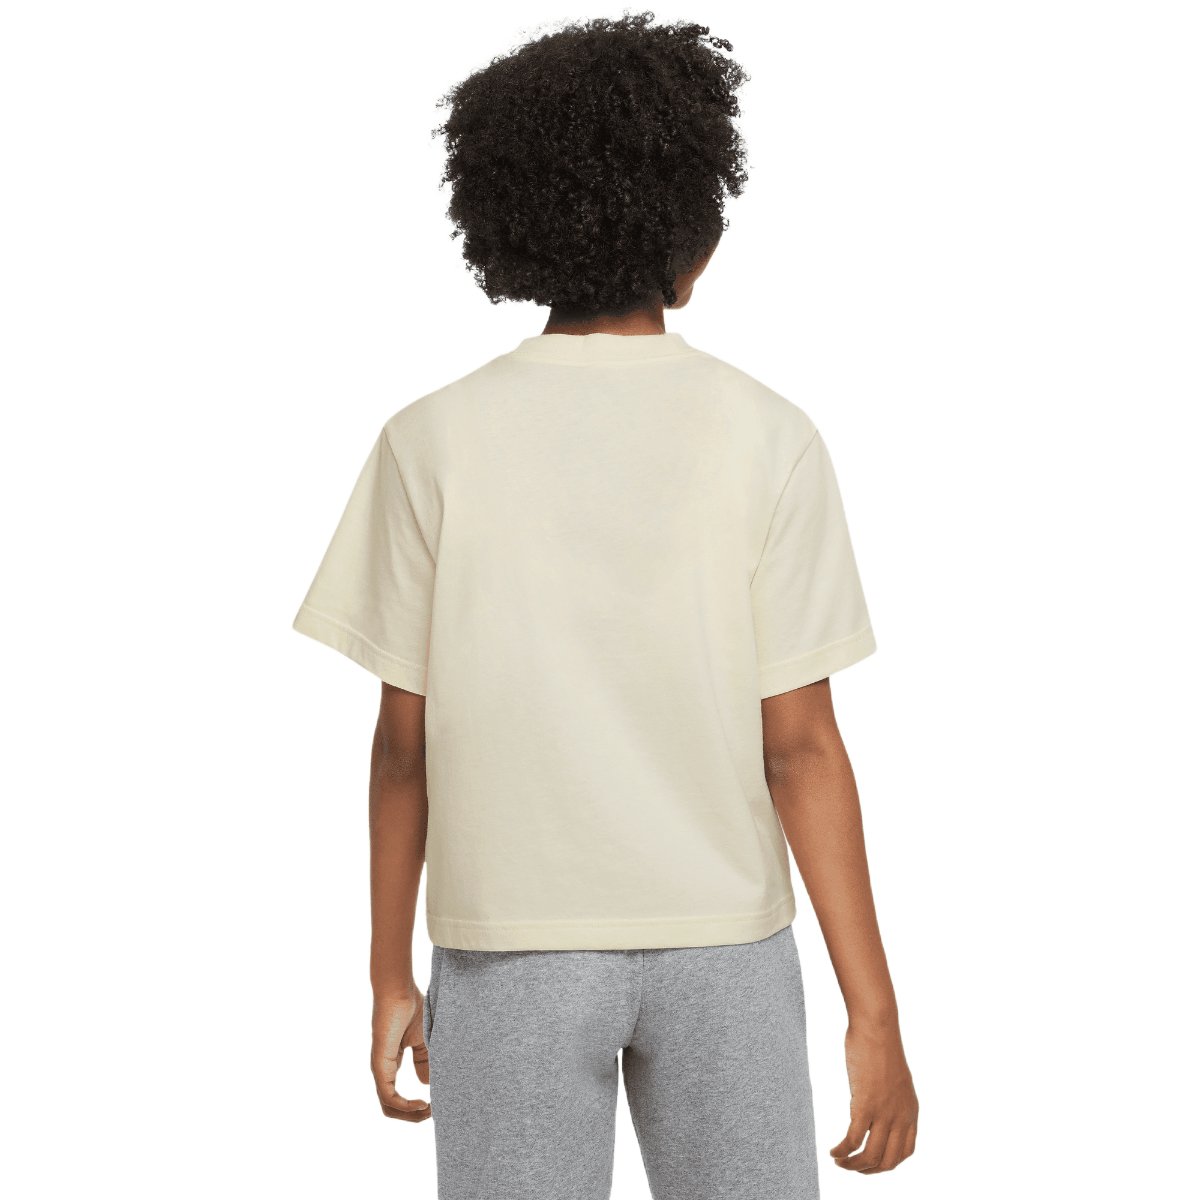 Nike Sportswear T-Shirt - Youth